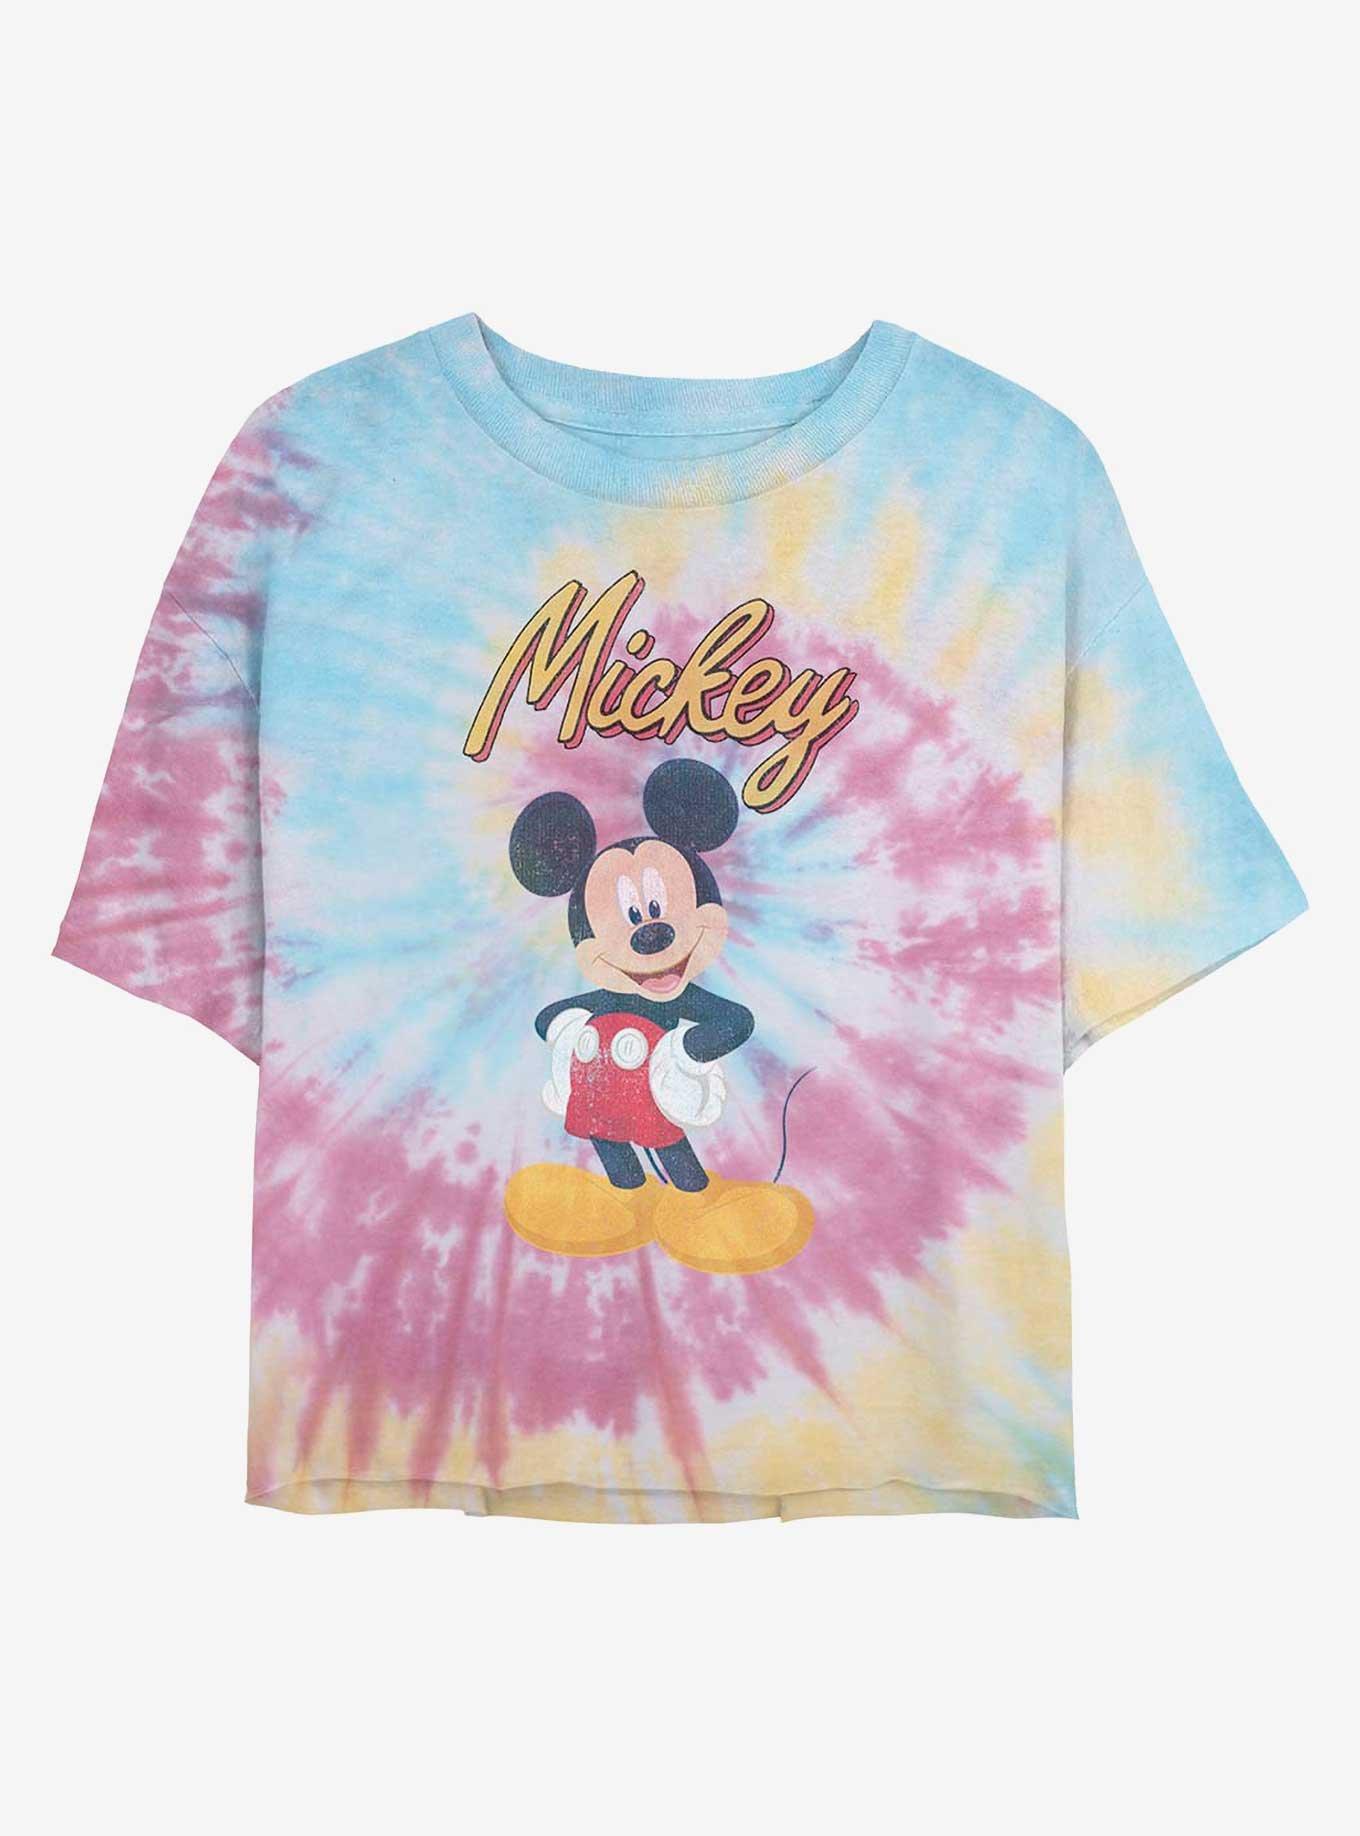 Disney Mickey Mouse Pose Tie Dye Crop Girls T-Shirt